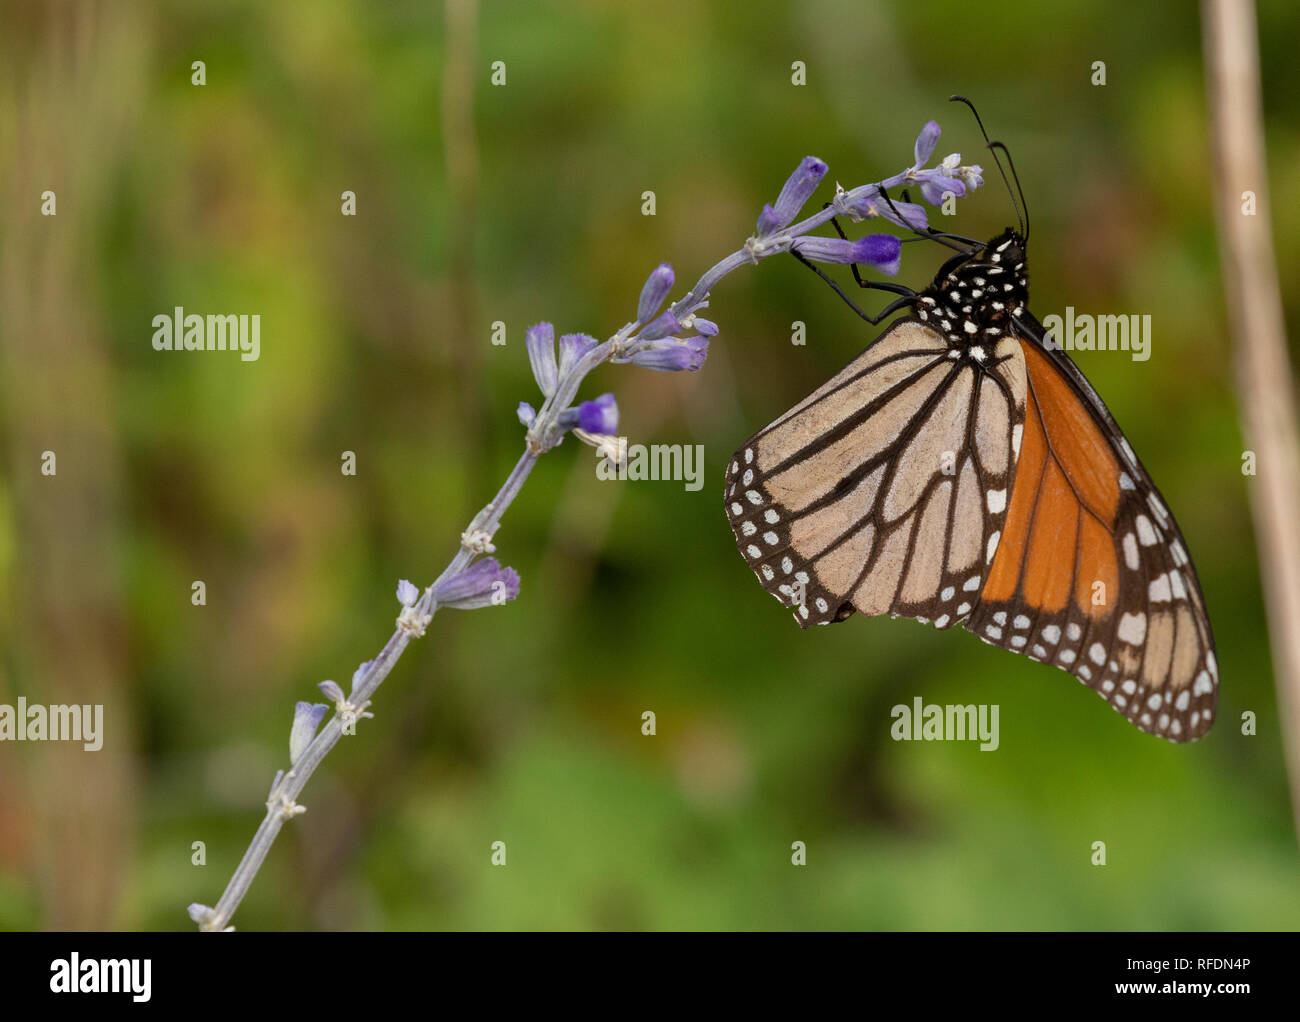 Monarch butterfly, Danaus plexippus, feeding on flowers in wildlife garden, Texas. Stock Photo